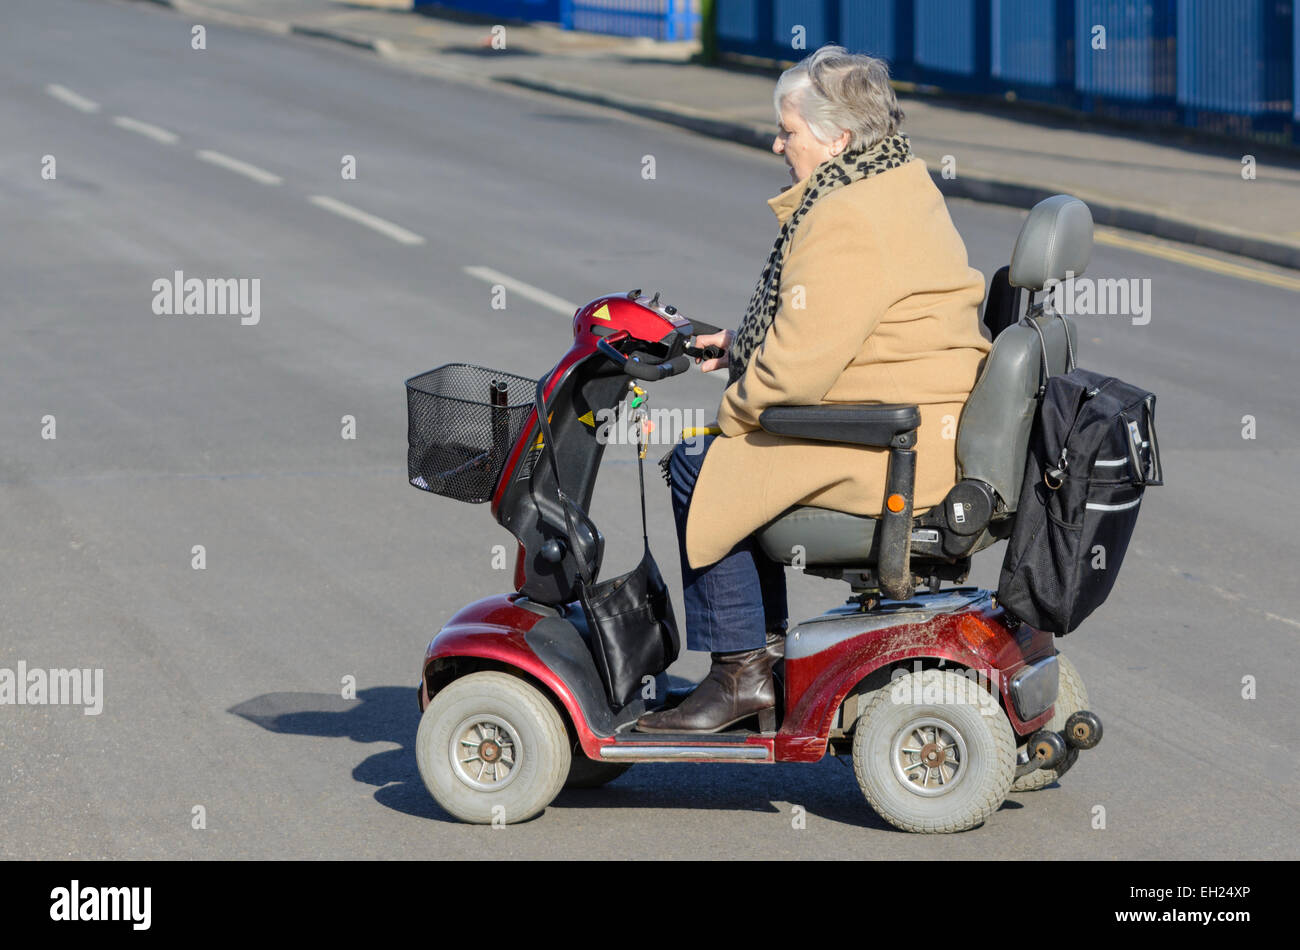 Mobilität scooter - ältere Dame beim Überqueren einer Straße in einem Mobilität scooter in Großbritannien. Ältere Frau Behinderung scooter. Stockfoto